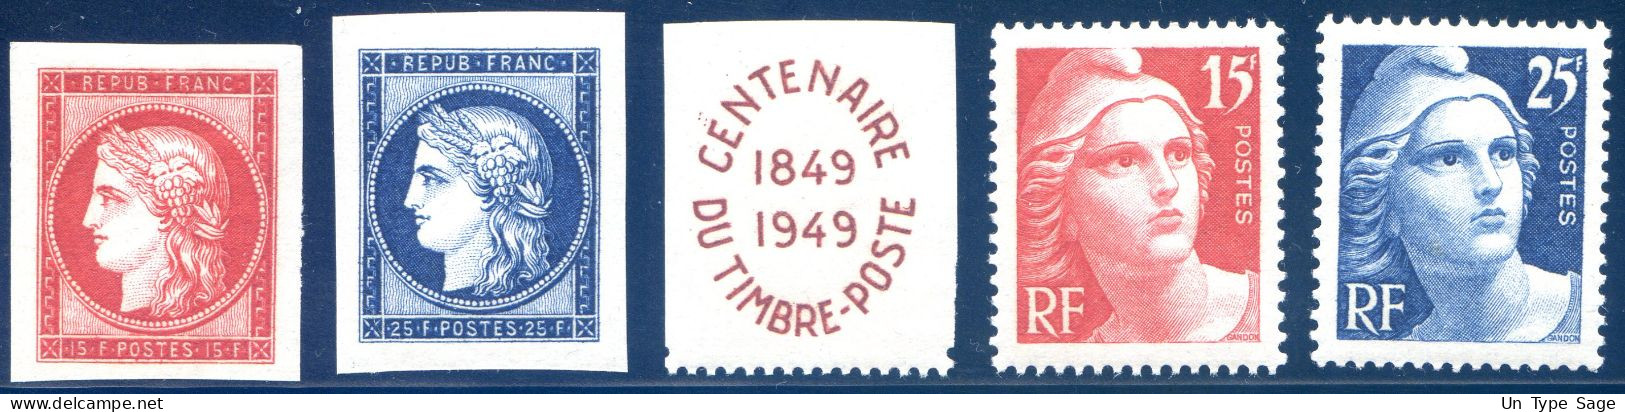 France N°830 à 833 Neuf - (F2911) - Unused Stamps